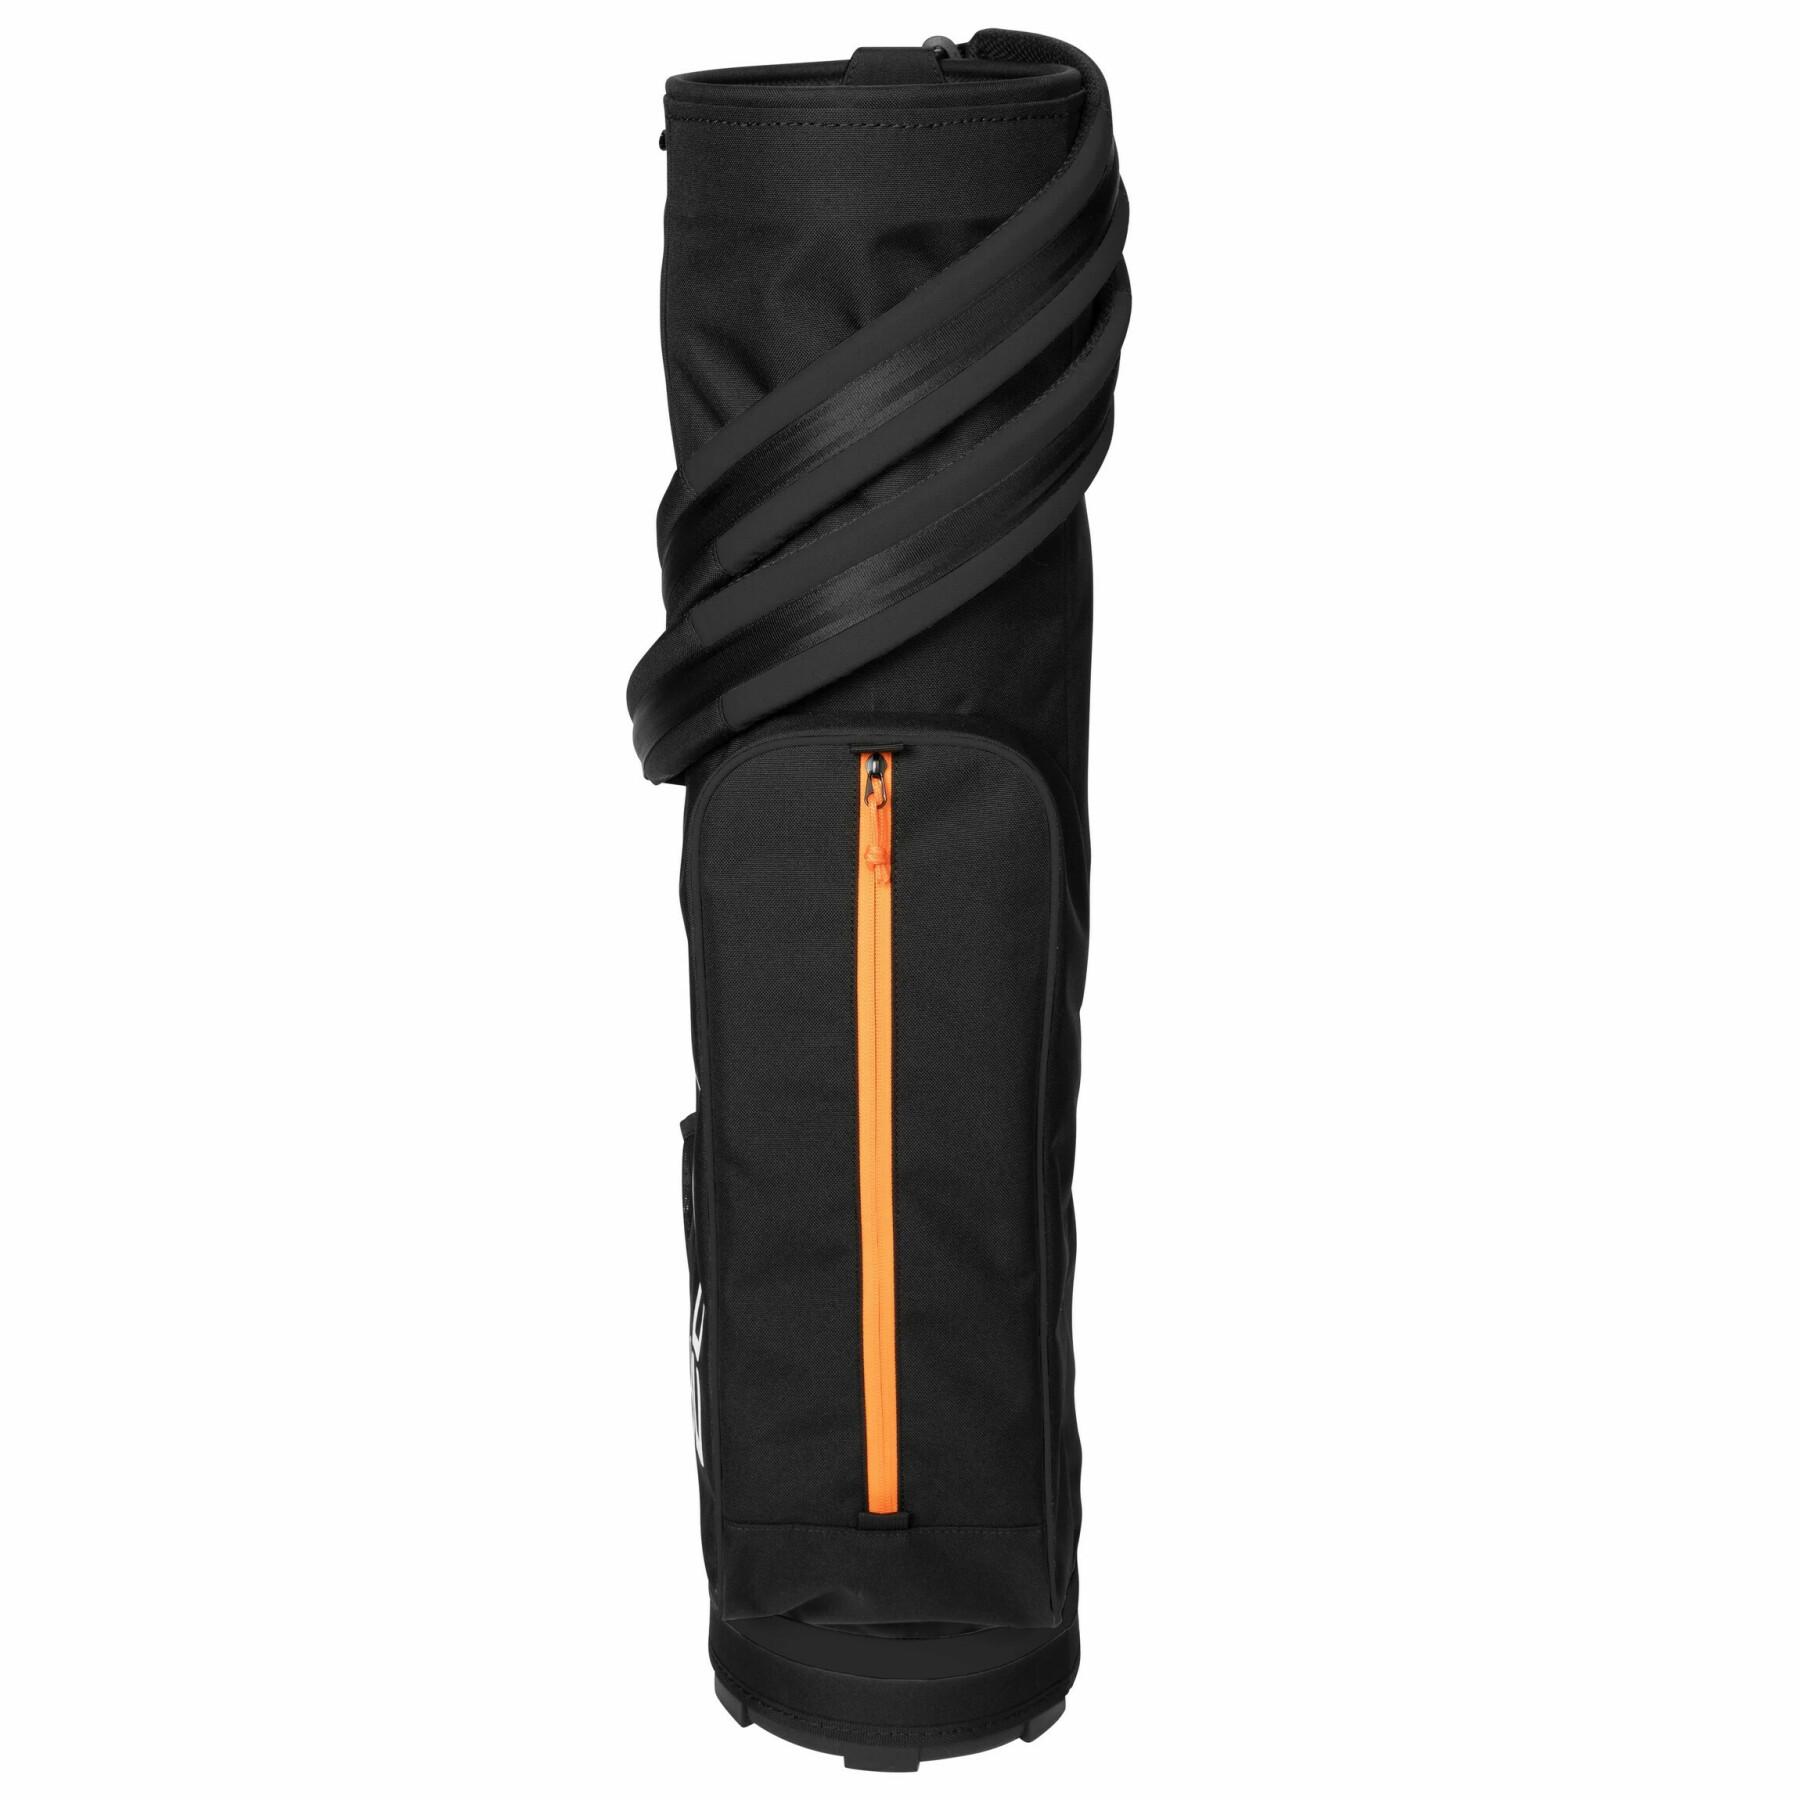 Golf bag Cobra Ultralight Pencil